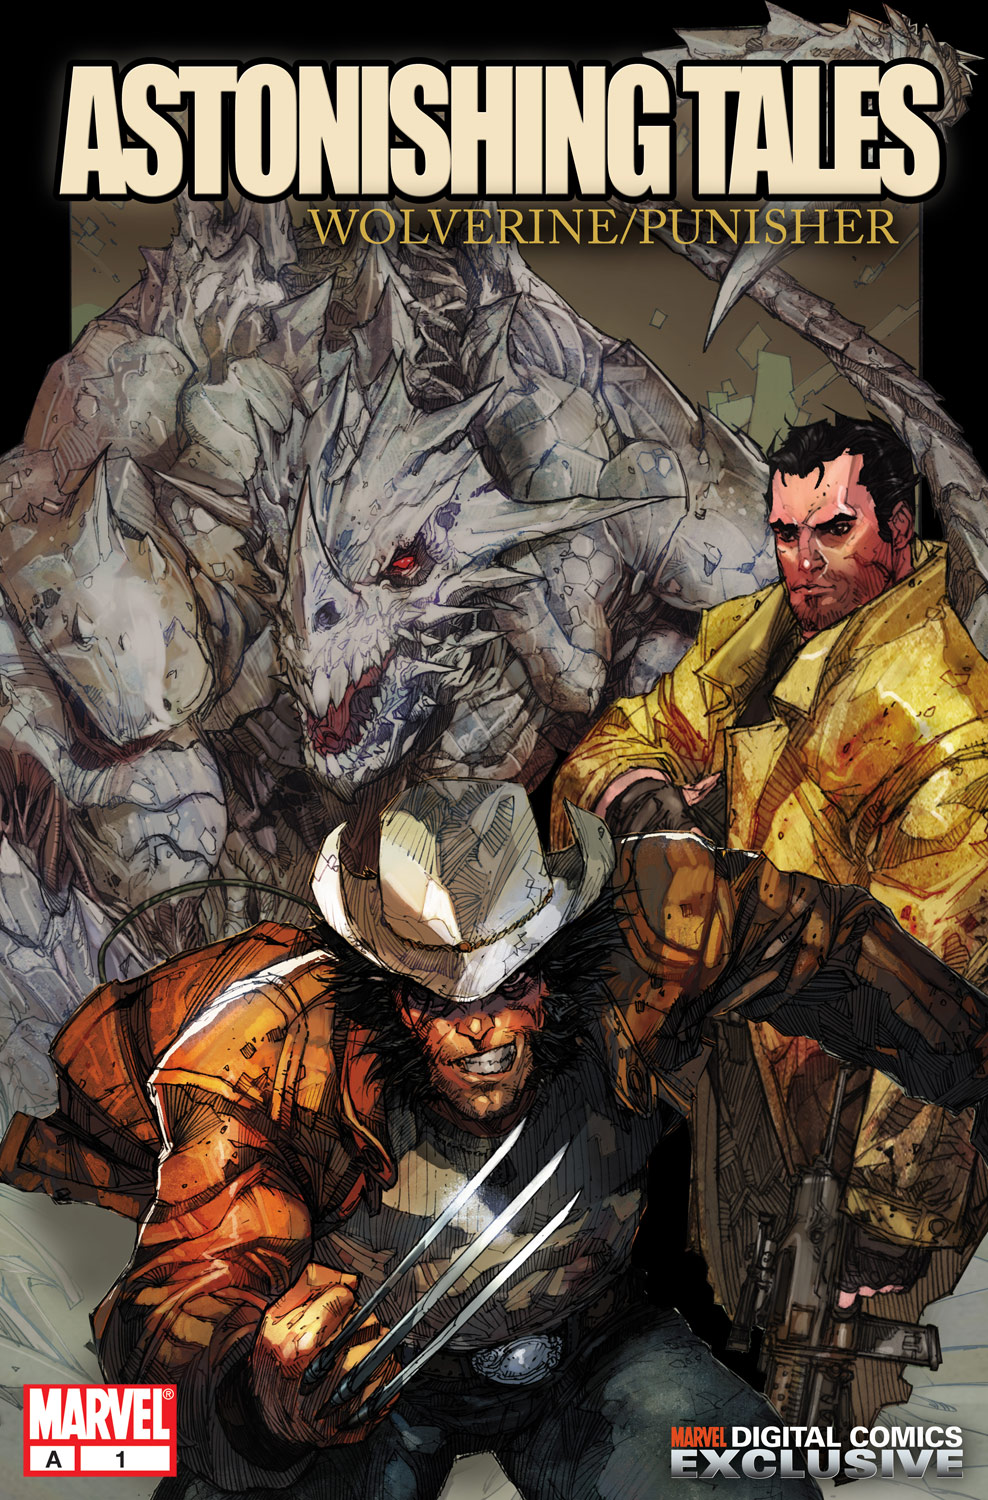 Astonishing Tales: Wolverine/Punisher Digital Comic (2008) #1